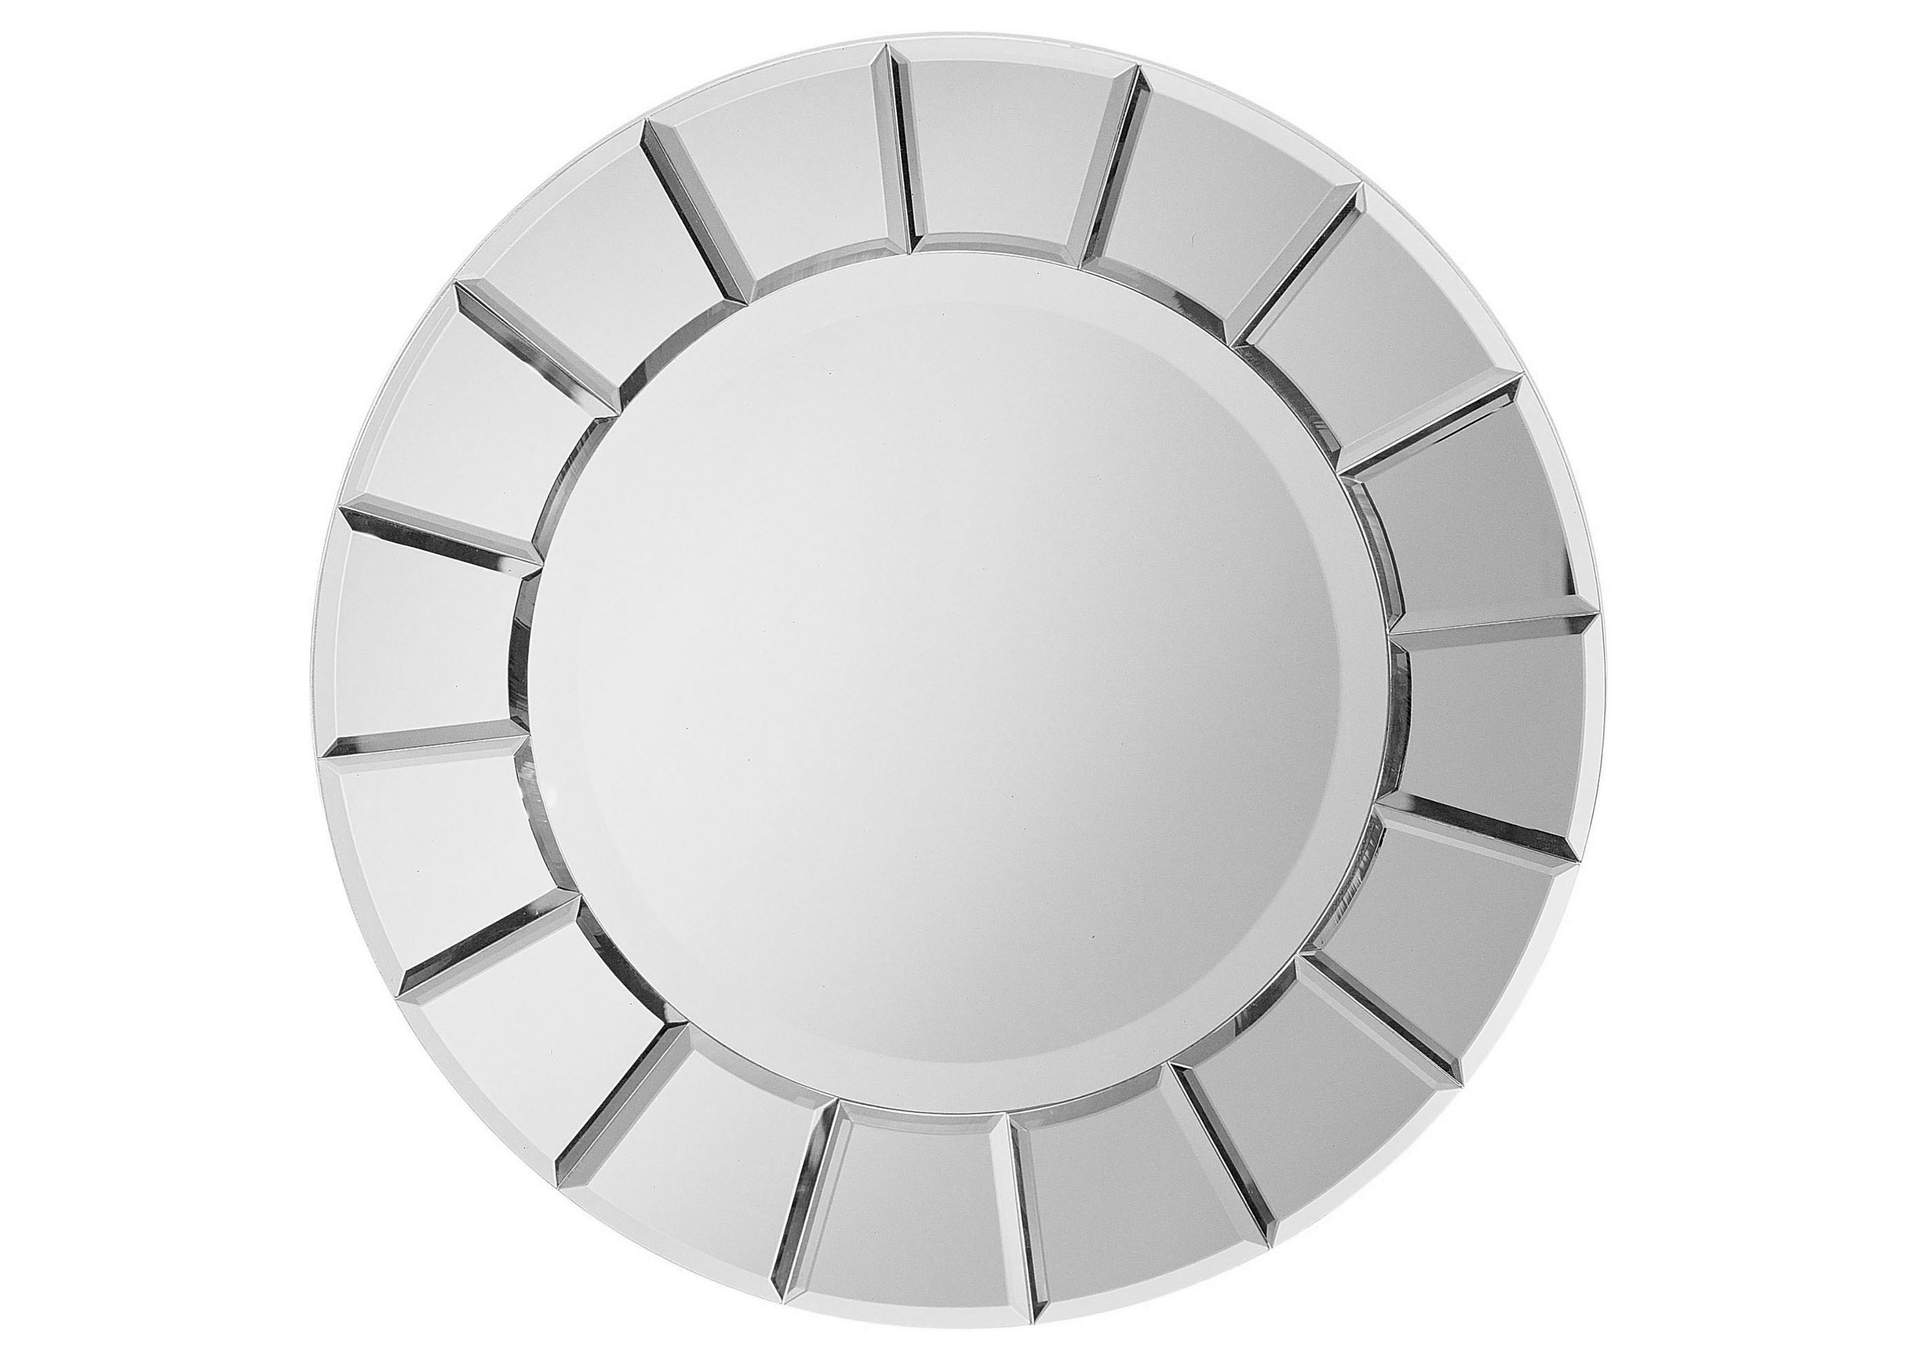 Fez Round Sun-shaped Mirror Silver,Coaster Furniture